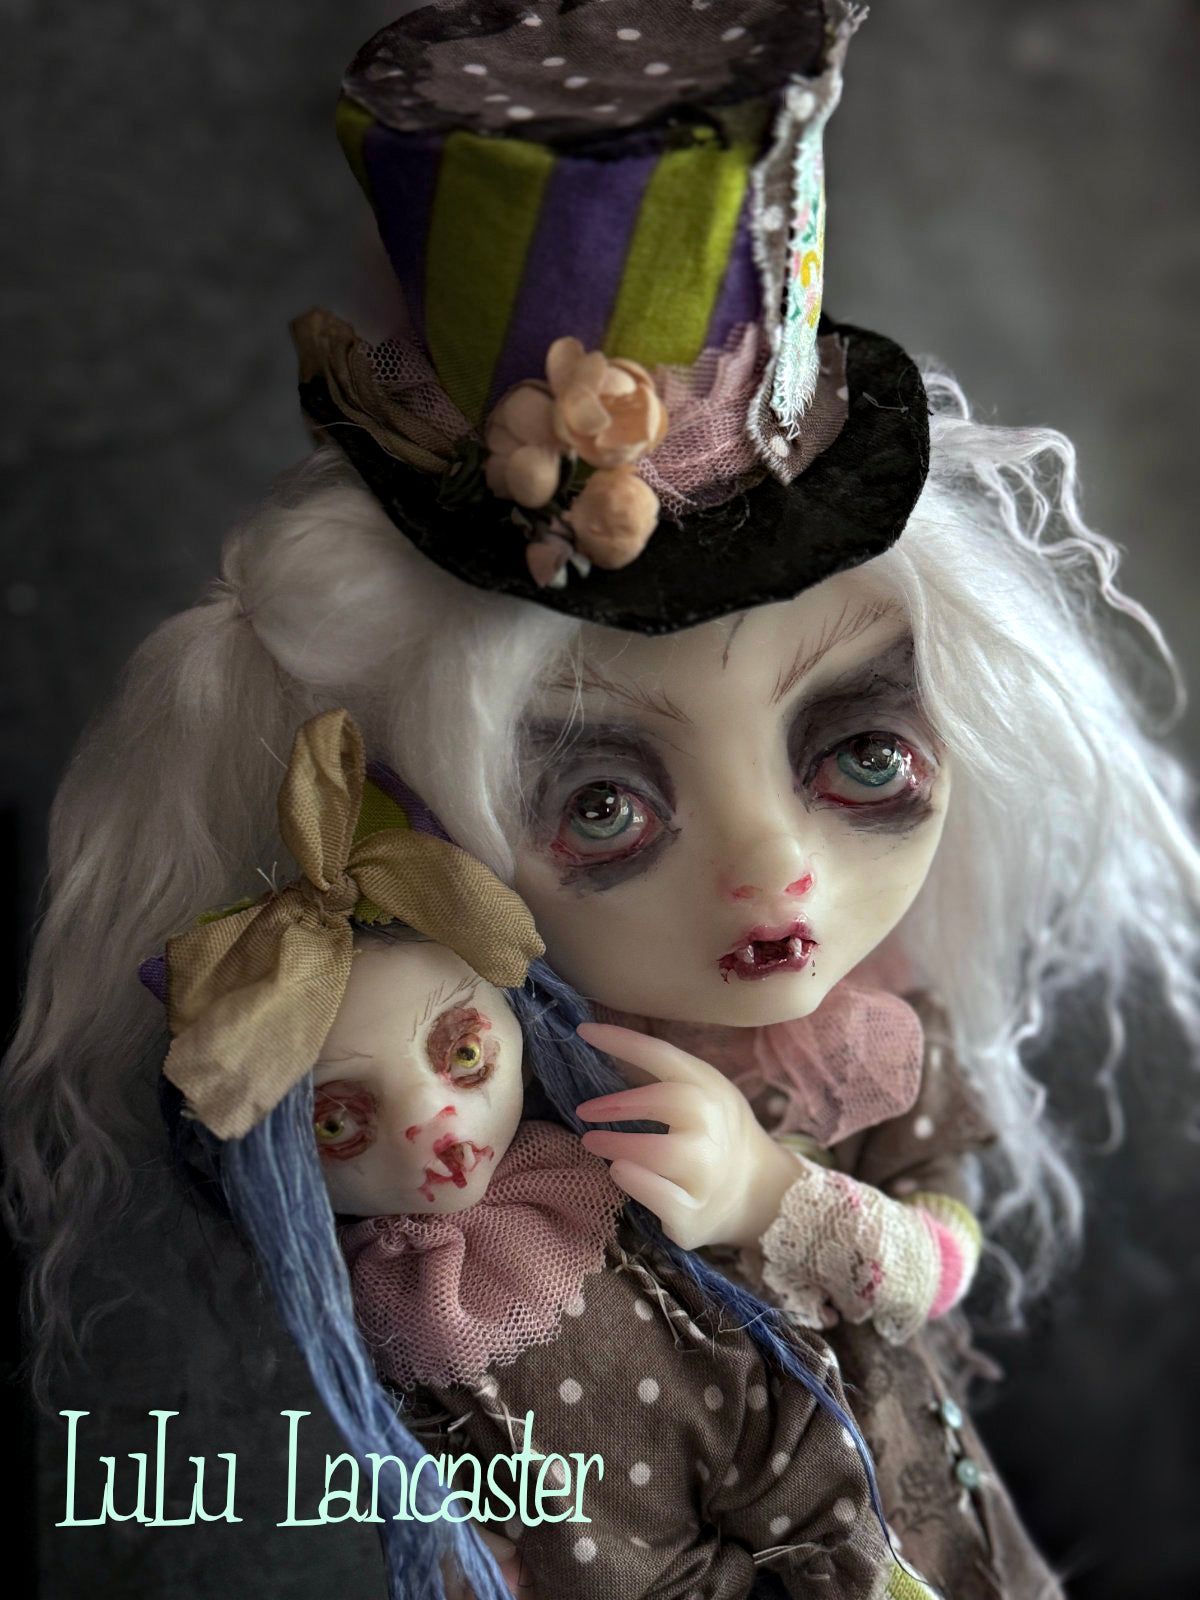 Joanie the Vampire Original LuLu Lancaster Art Doll